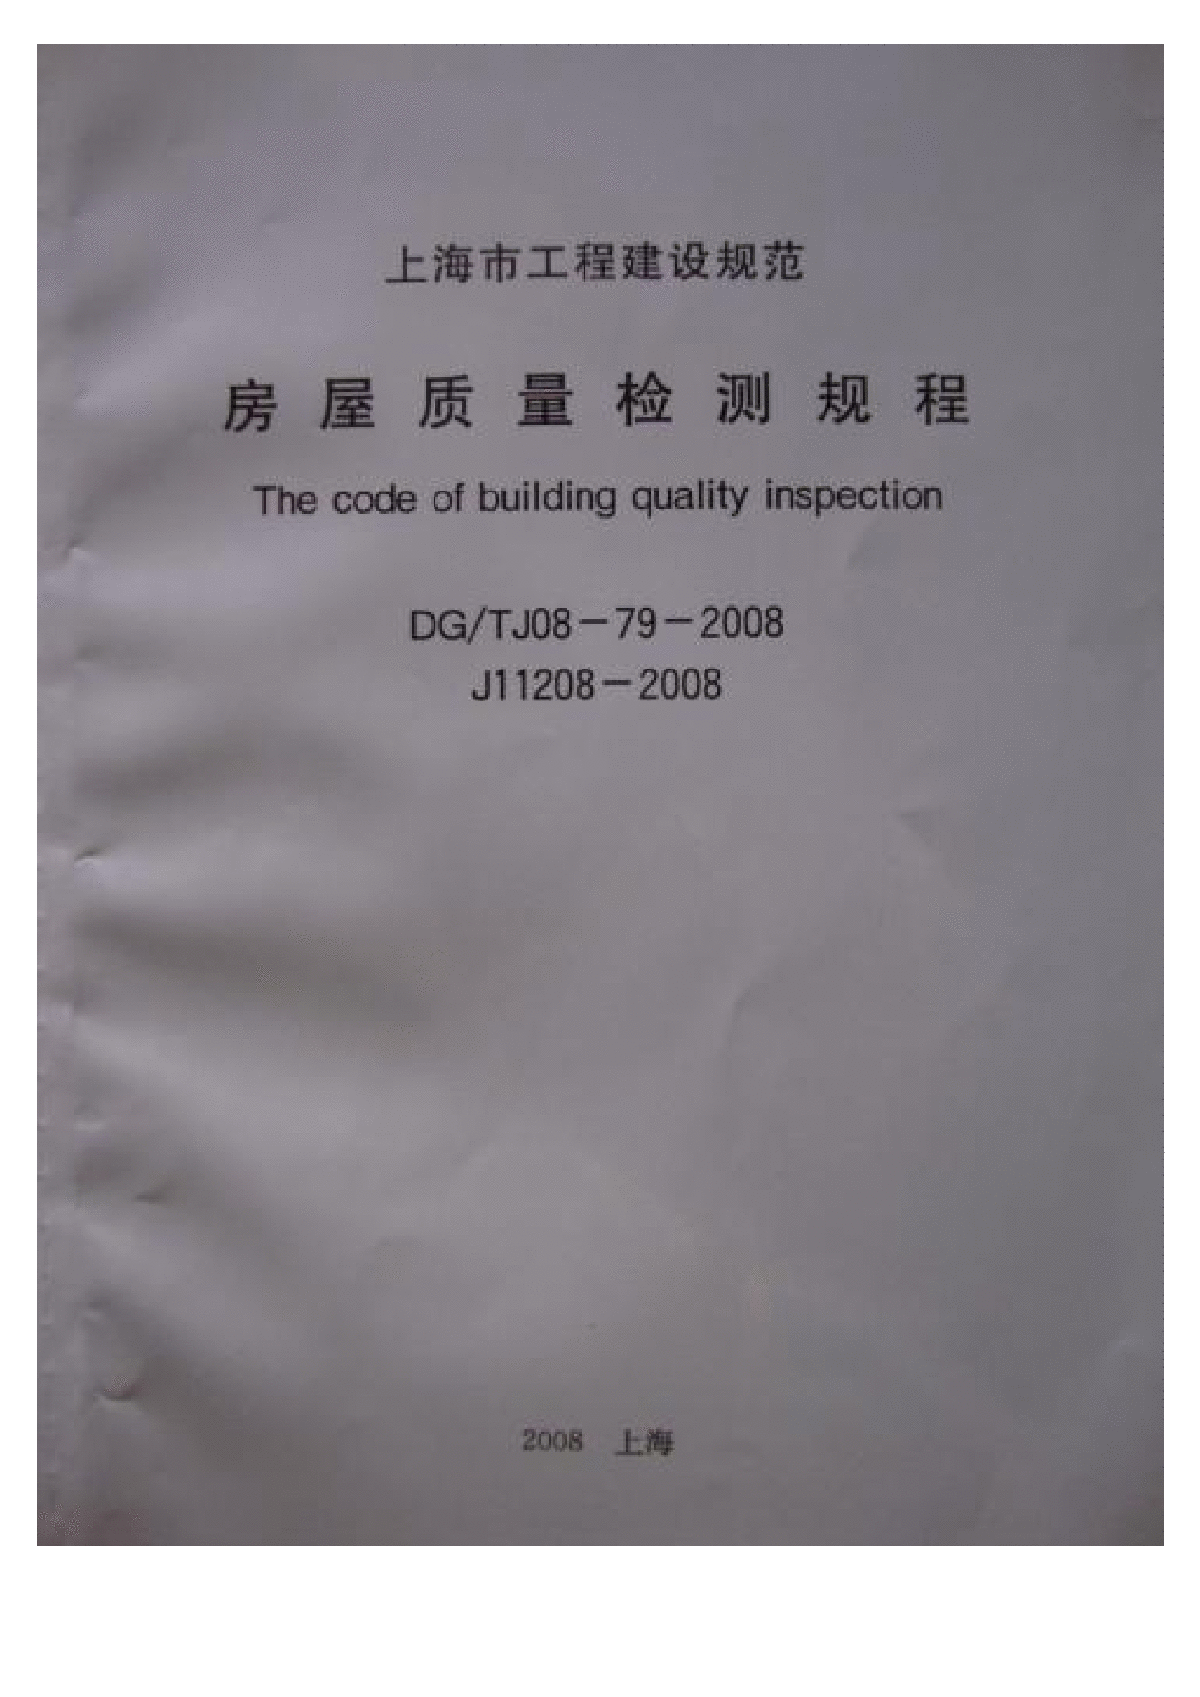 DGTJ08-79-2008 房屋质量检测规程-图一